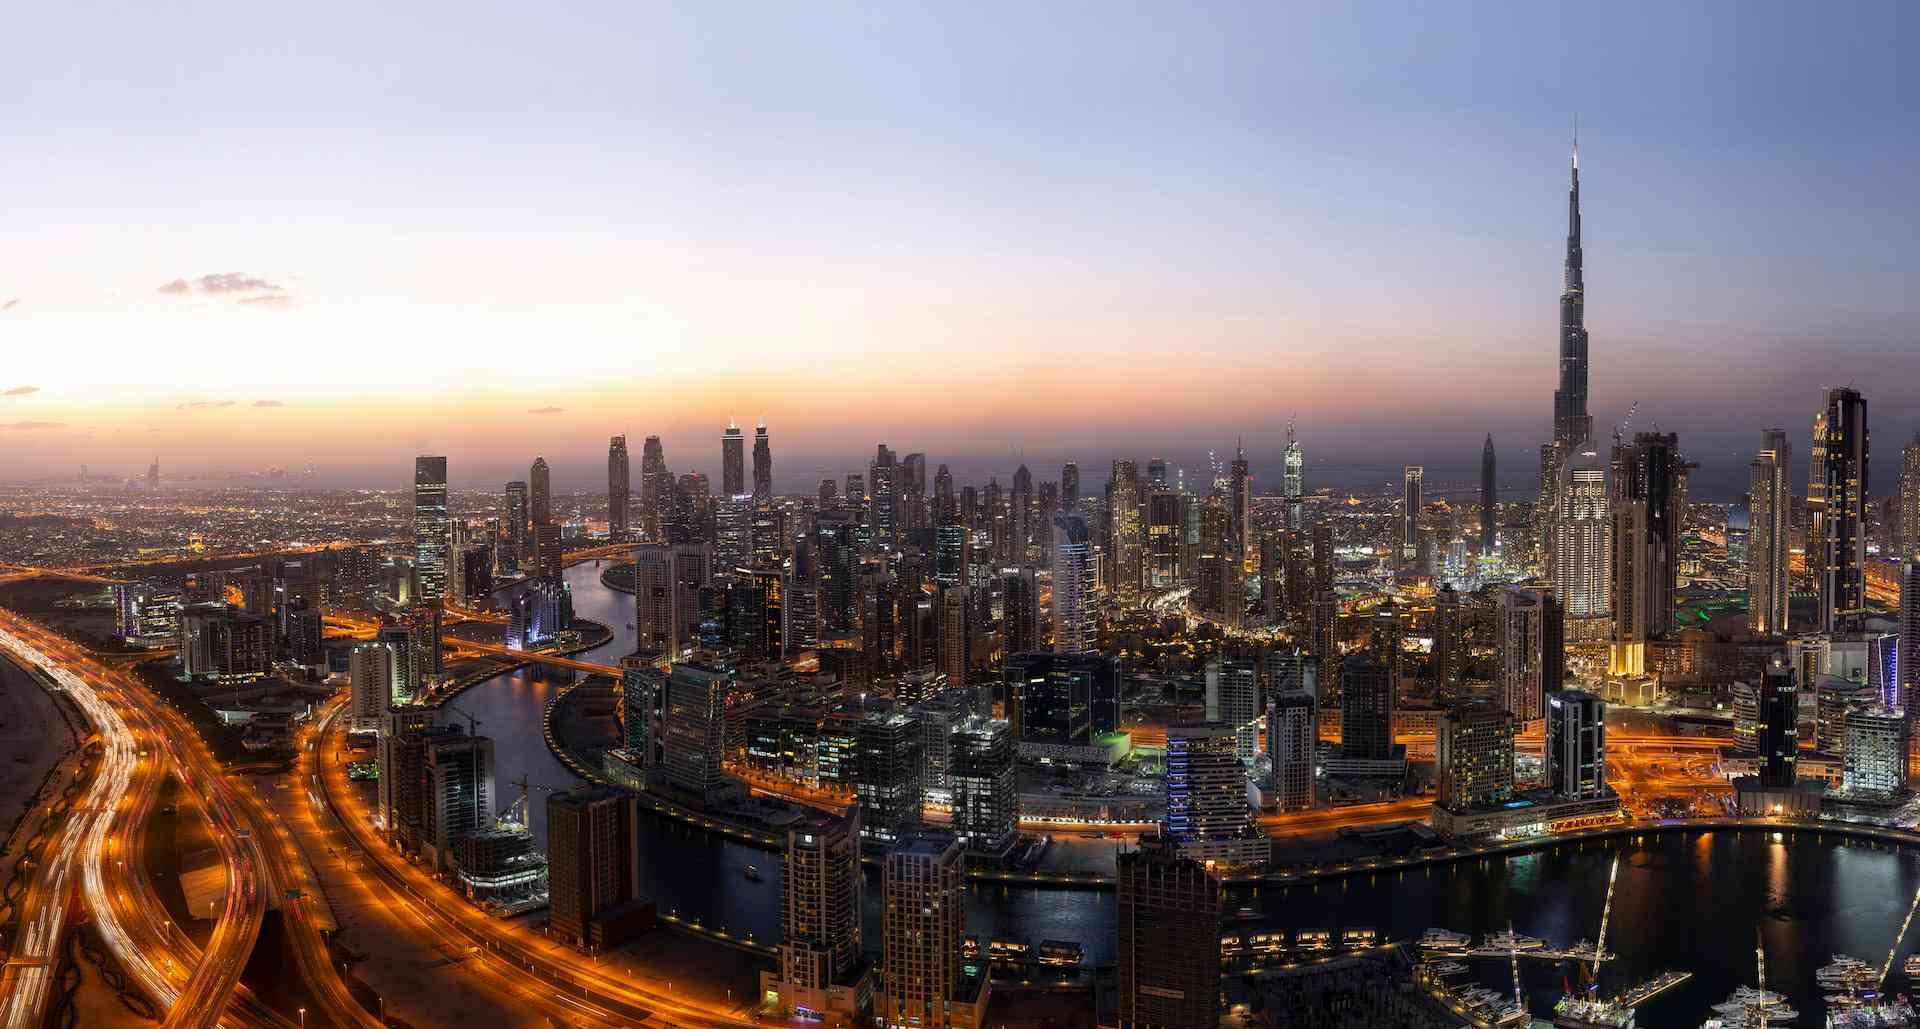 Sunset view of Dubai